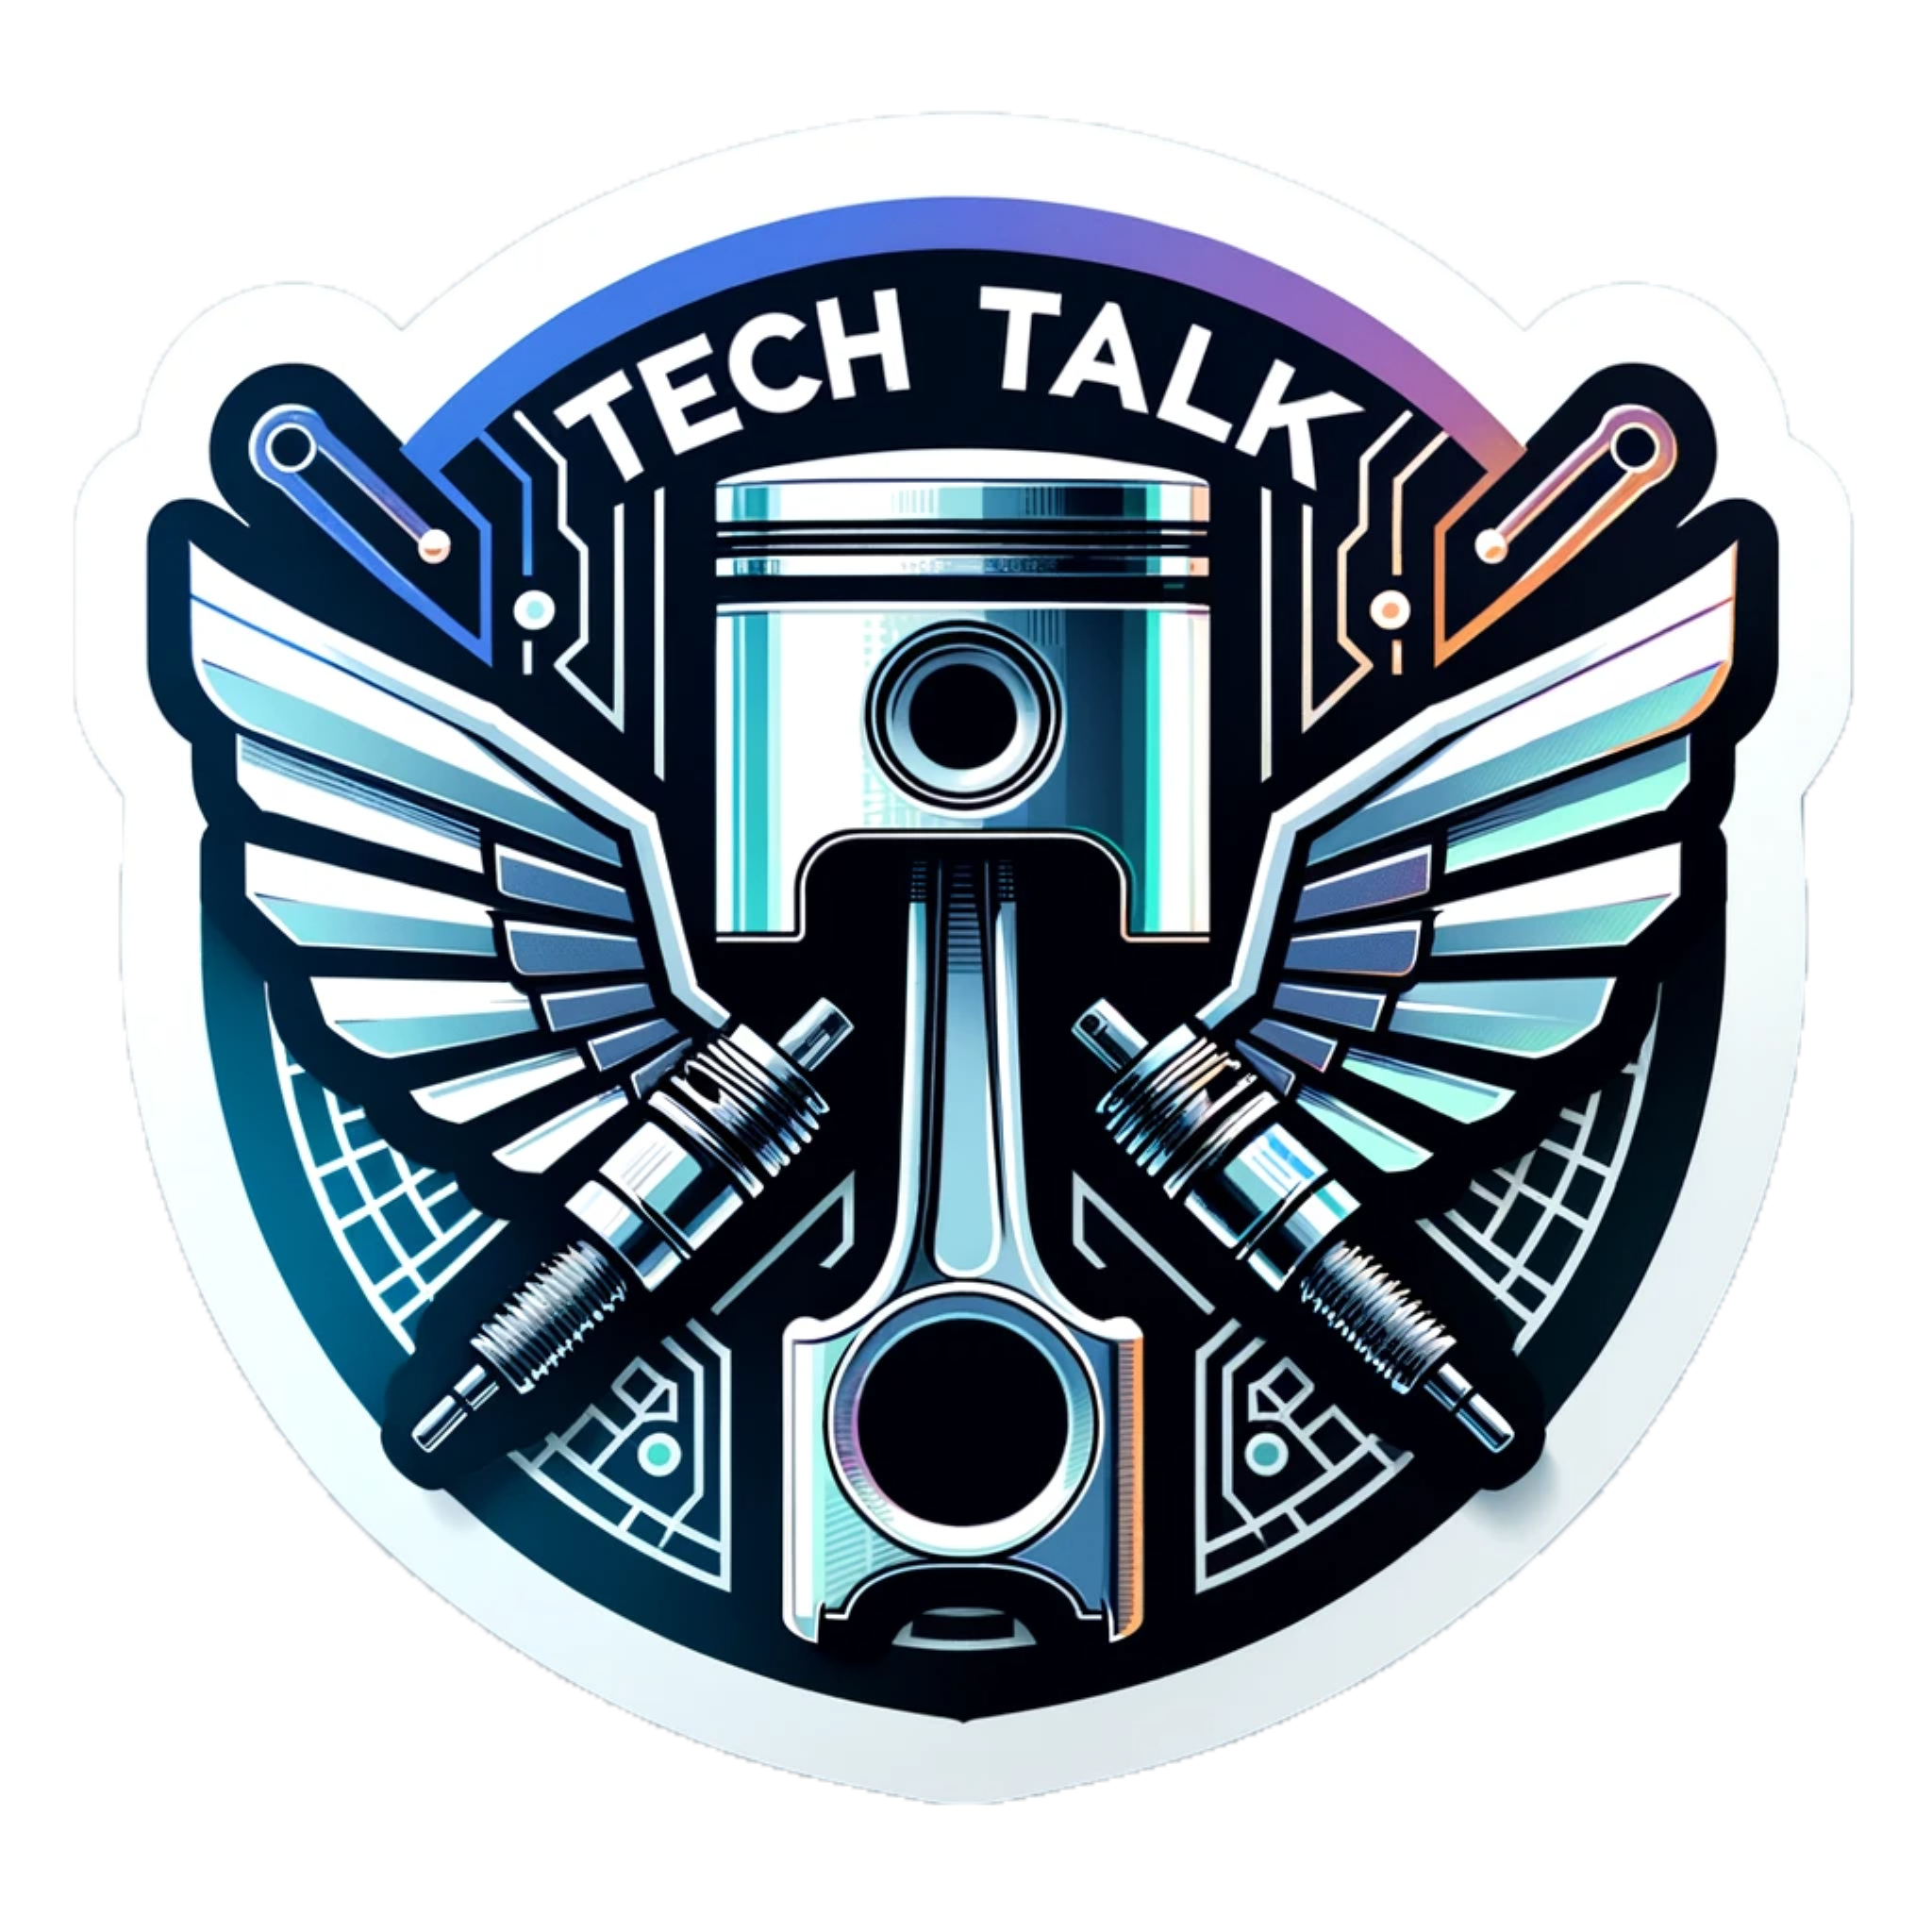 Caliente Tech Talk